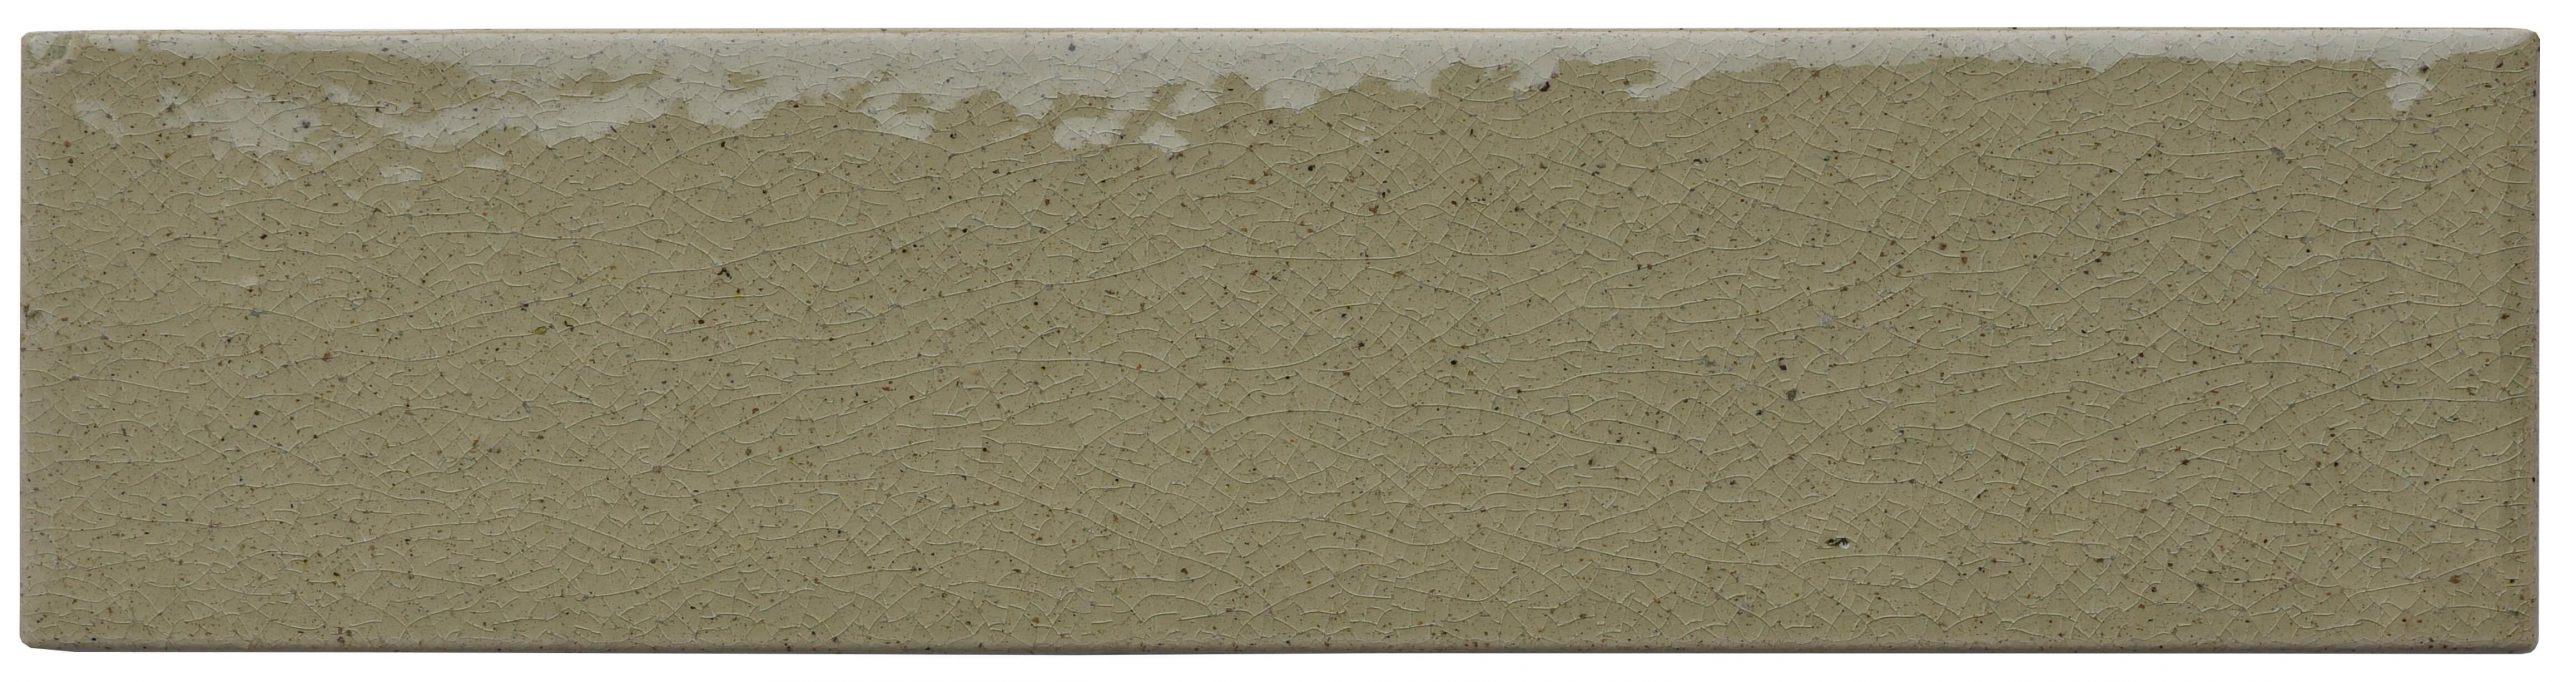 Panorama Ceramic Crackle Glazed Wall Tile